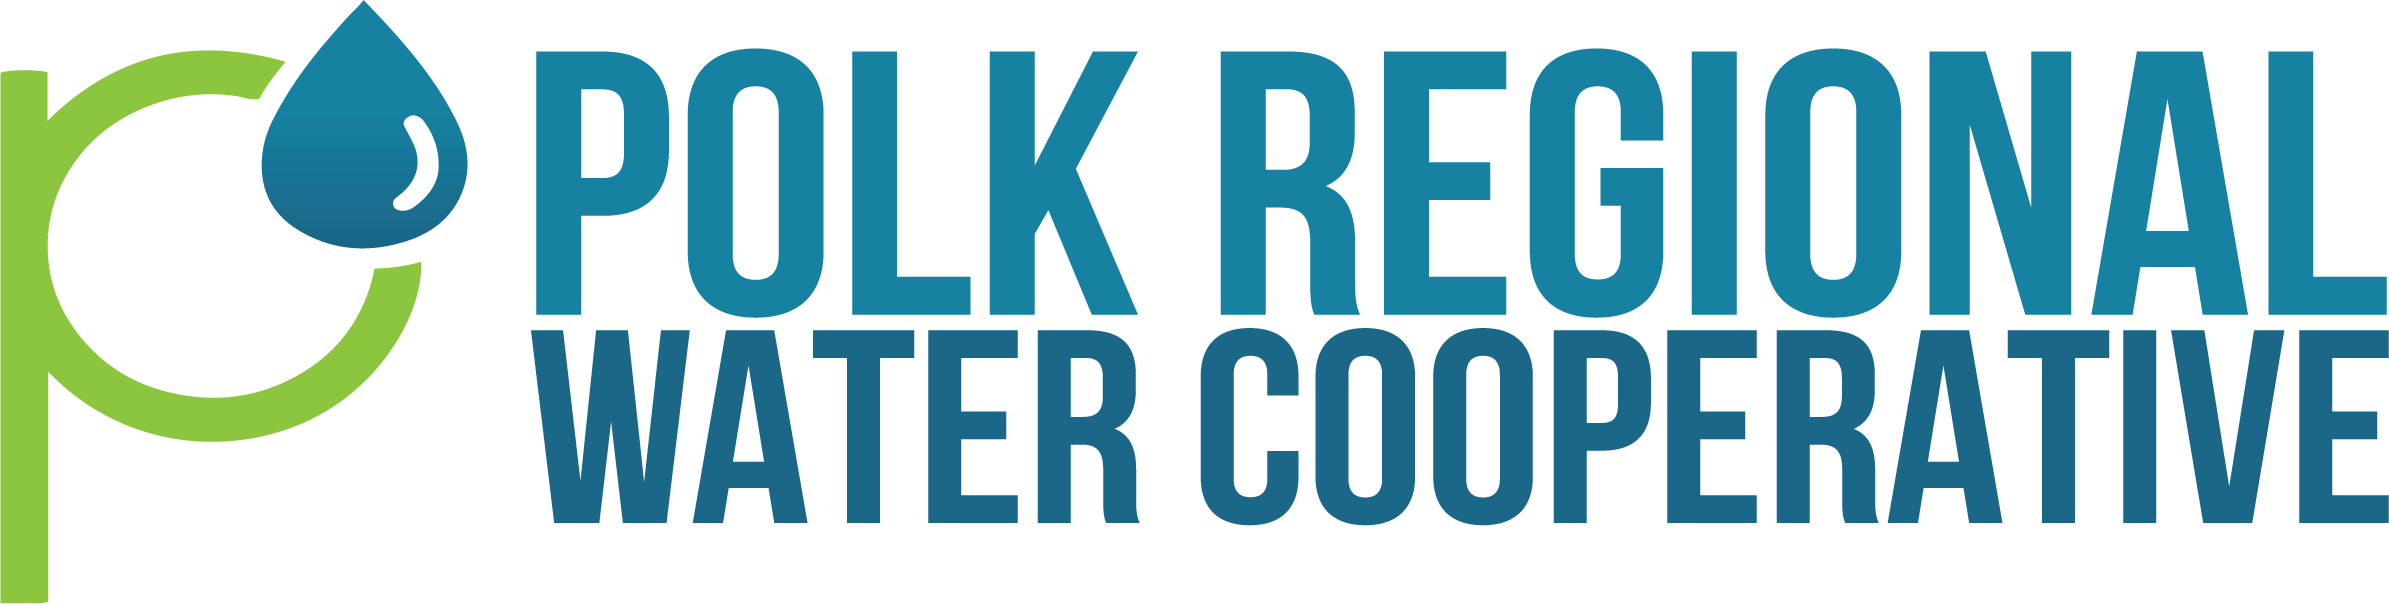 Polk Regional Water Cooperative Logo